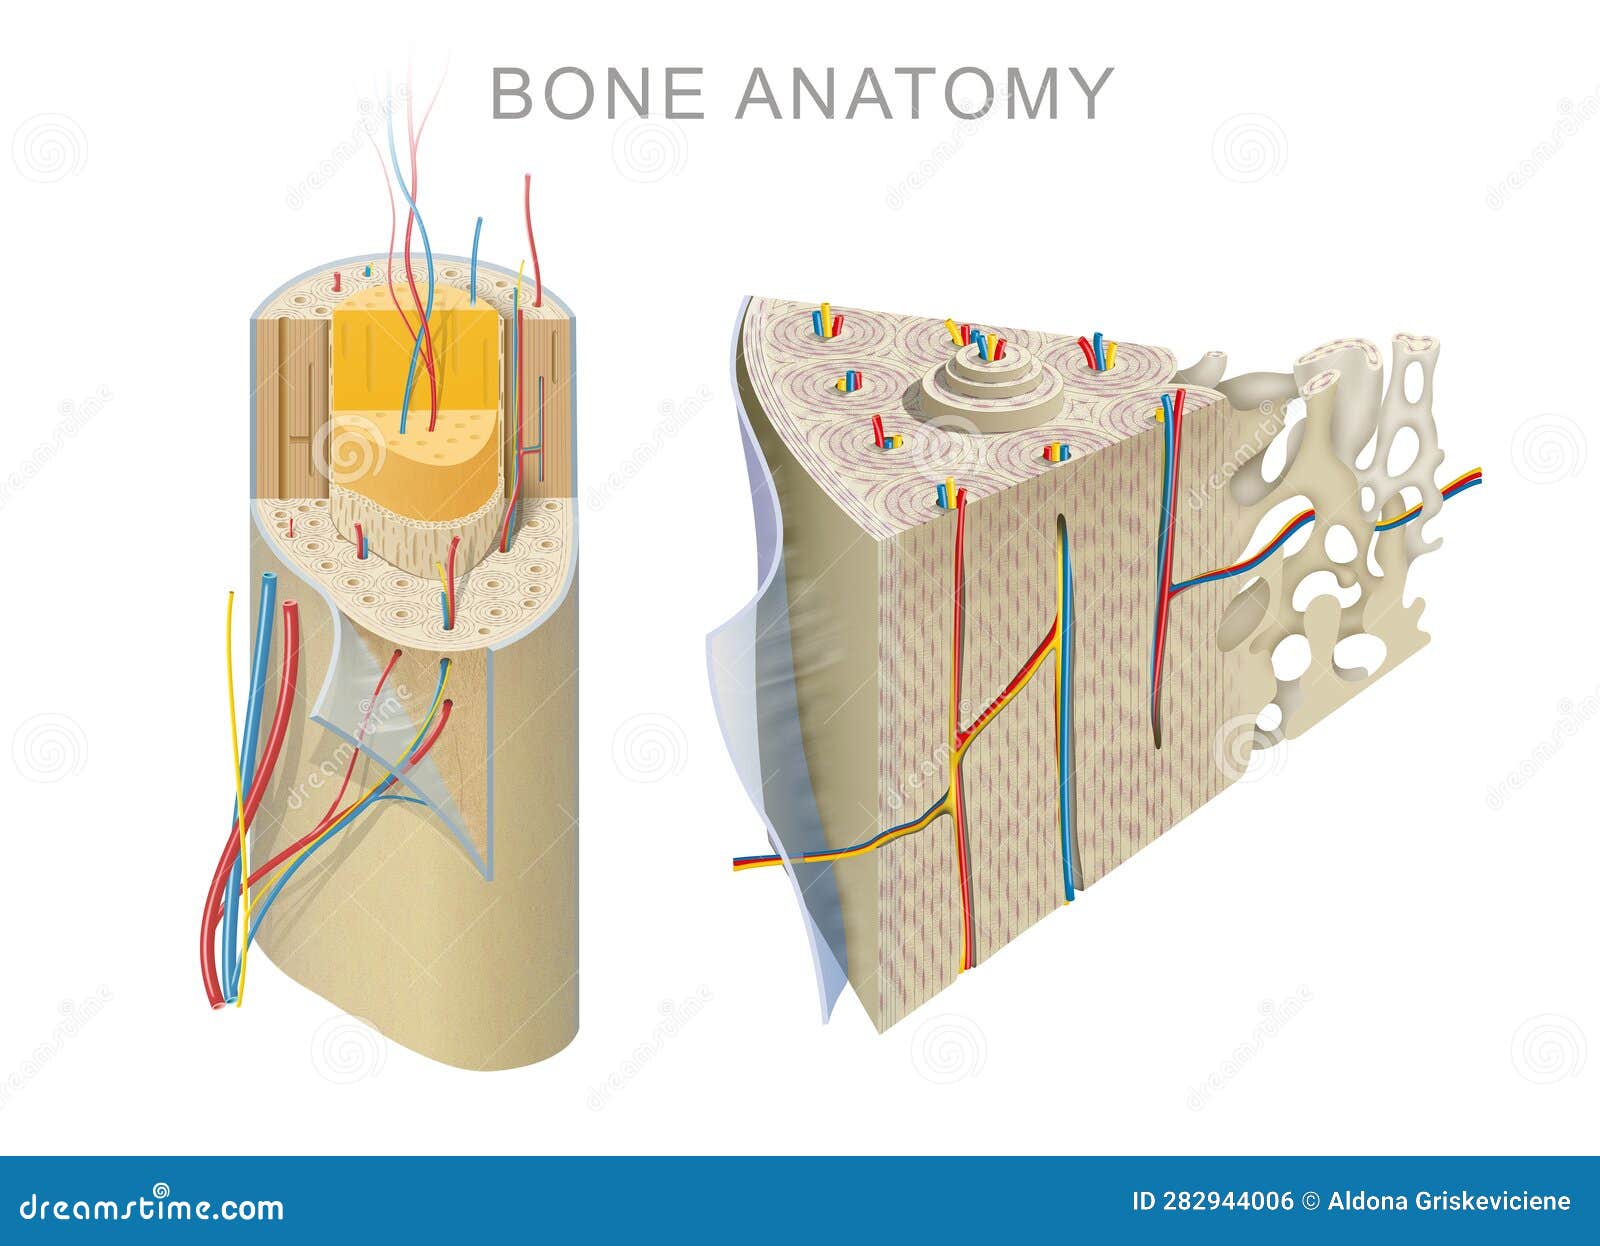 anatomy of a long bone